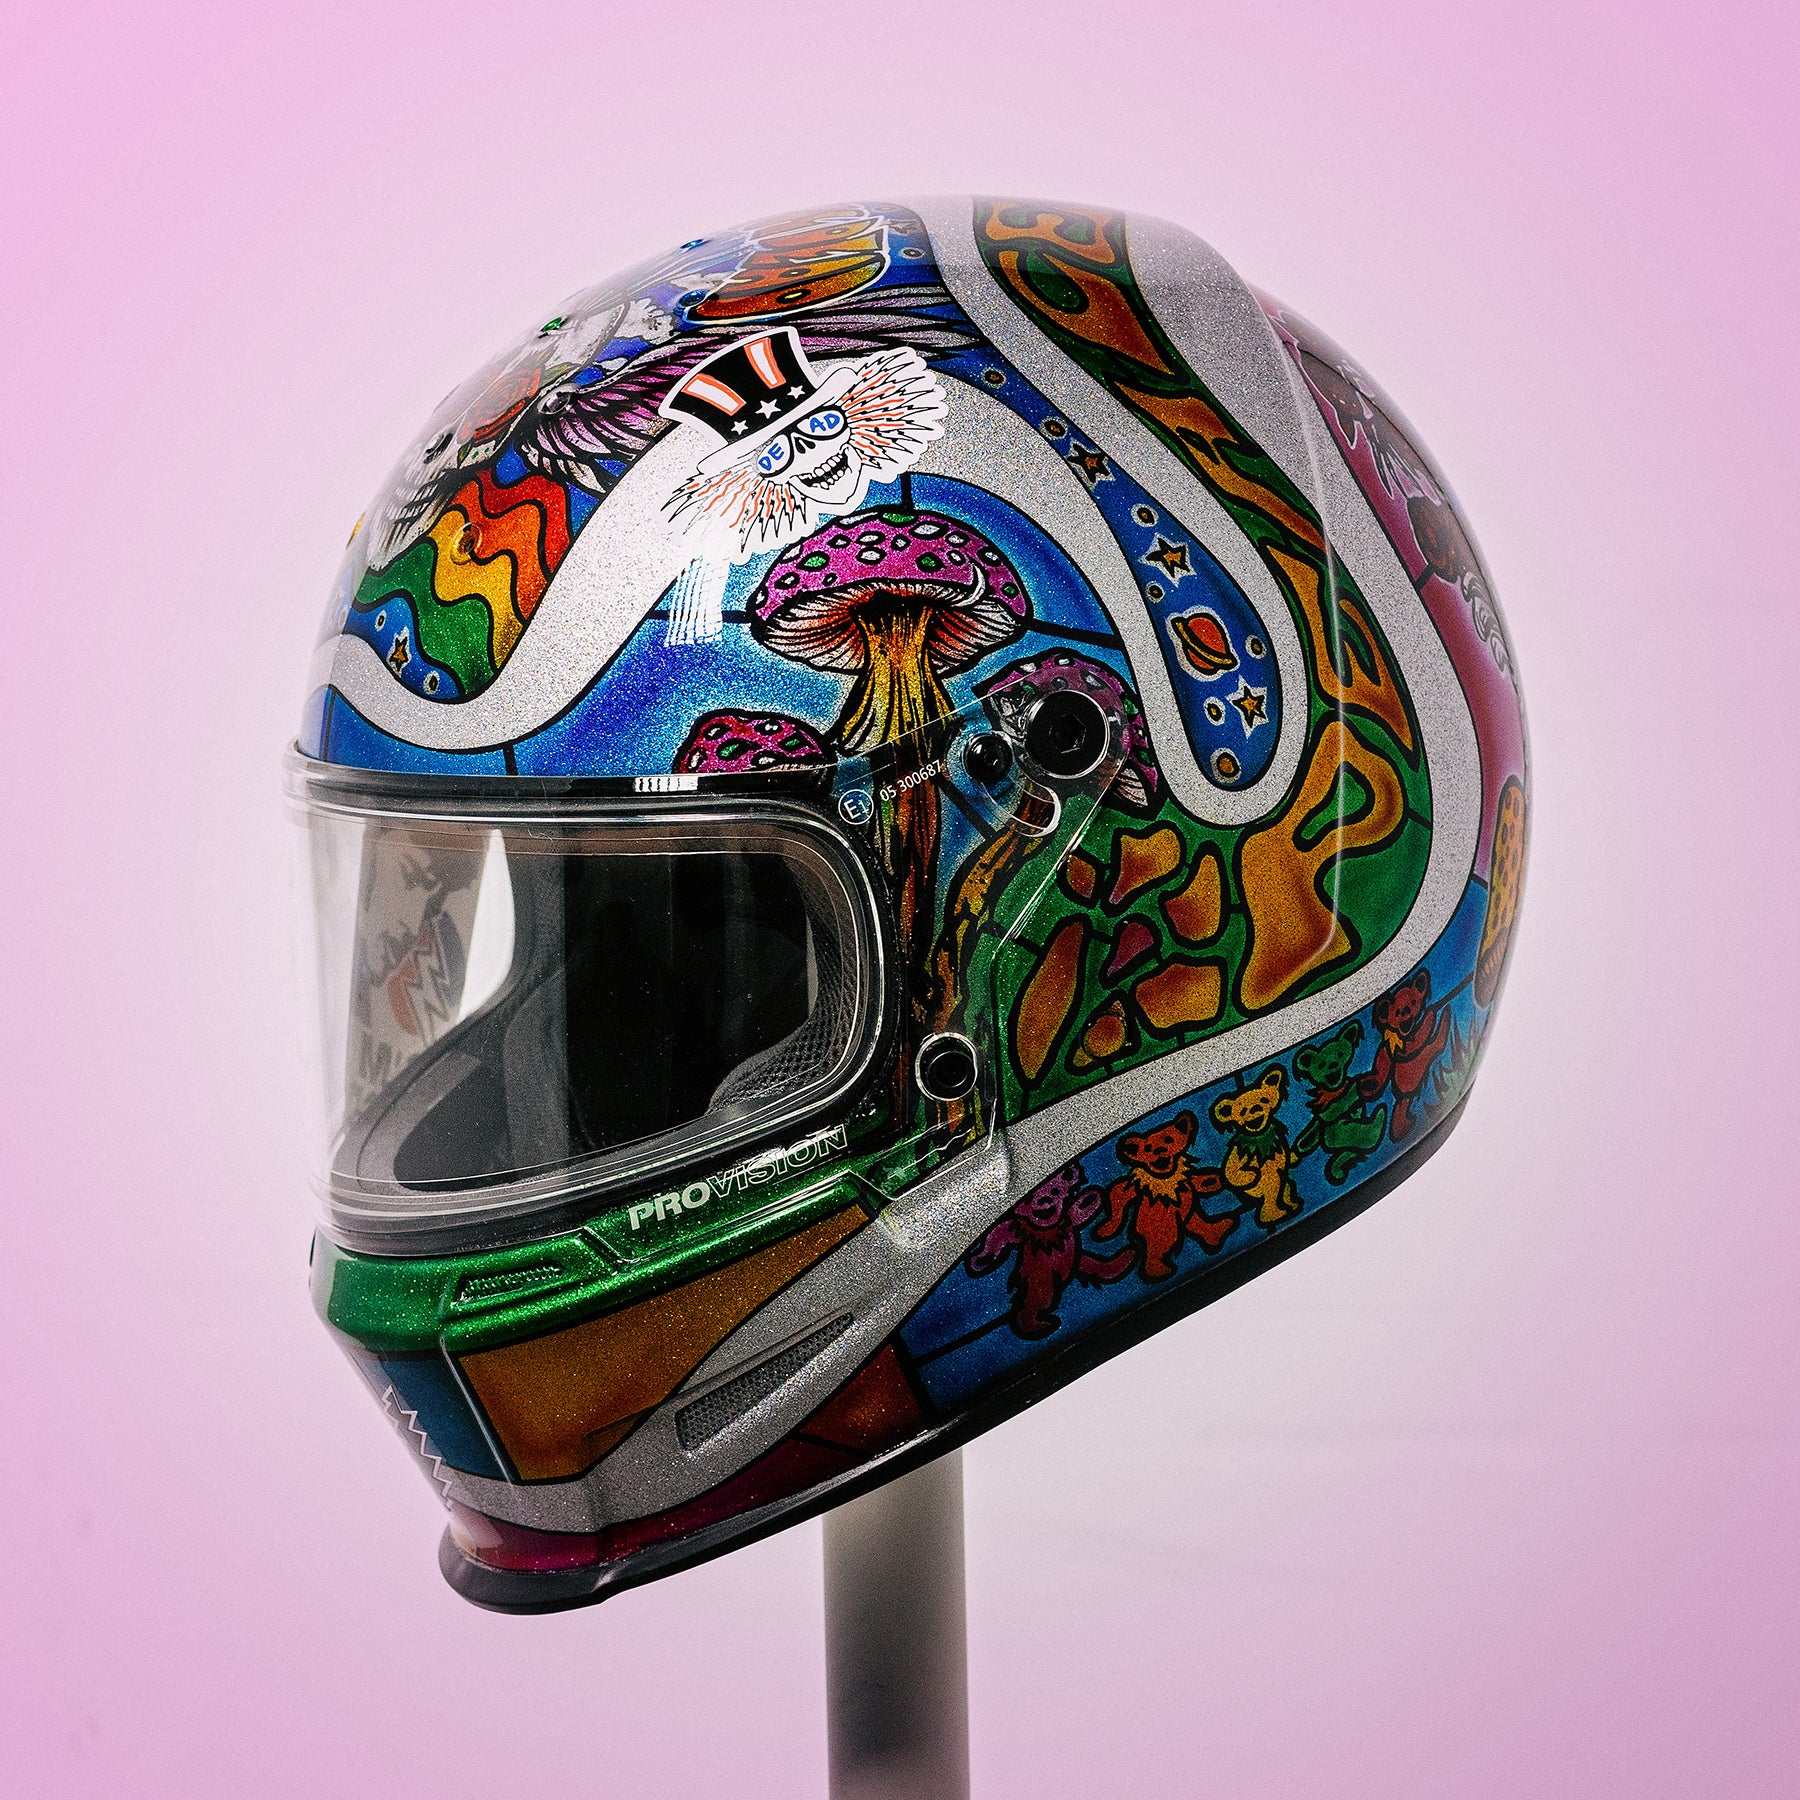 Trippy Ten helmet art show Pittsburgh Glory Daze motorcycle show Bell Helmets Paint Zoo Drummond